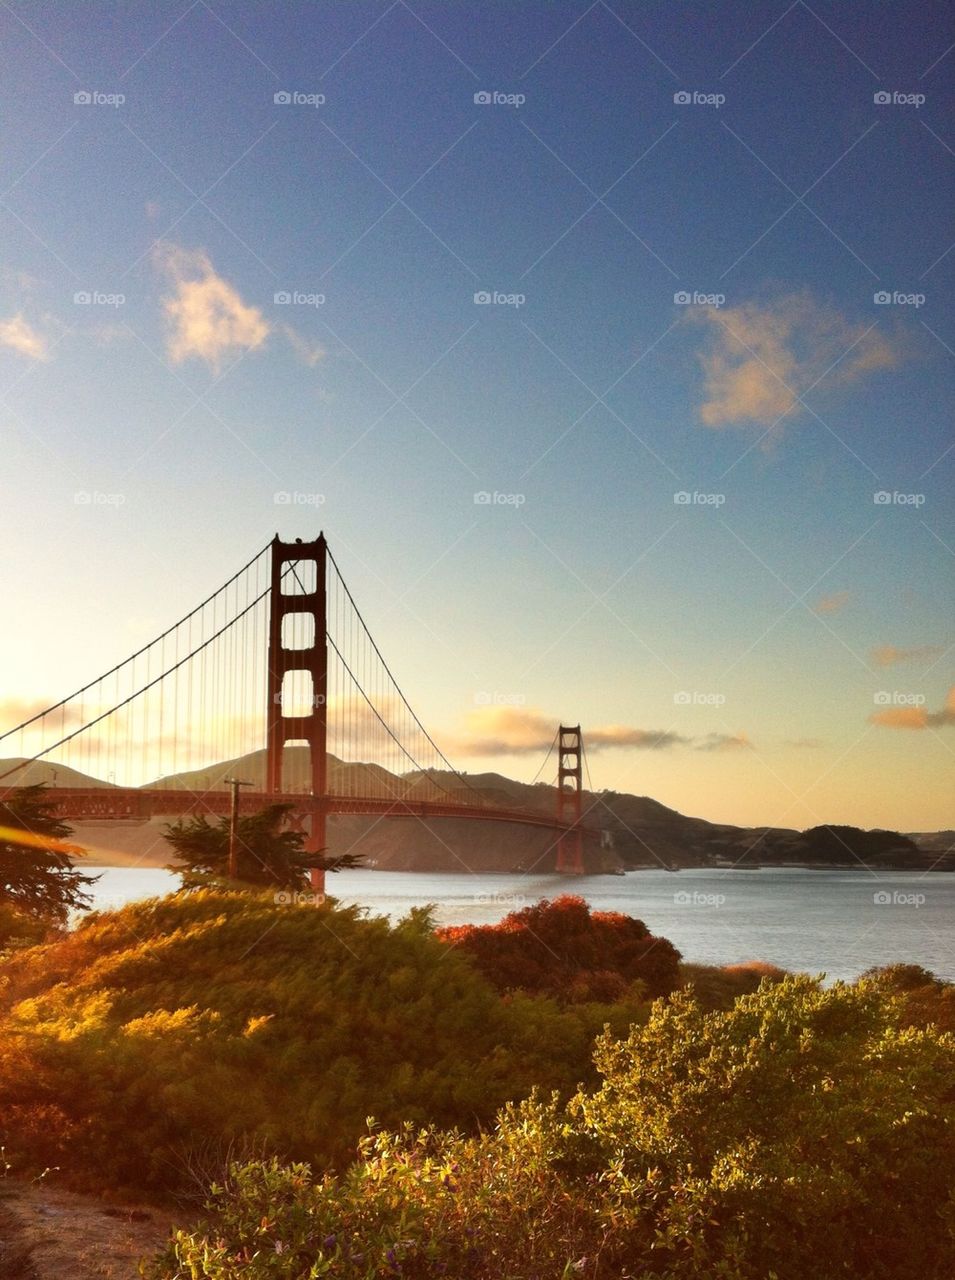 Dusk at the Golden Gate Bridge!